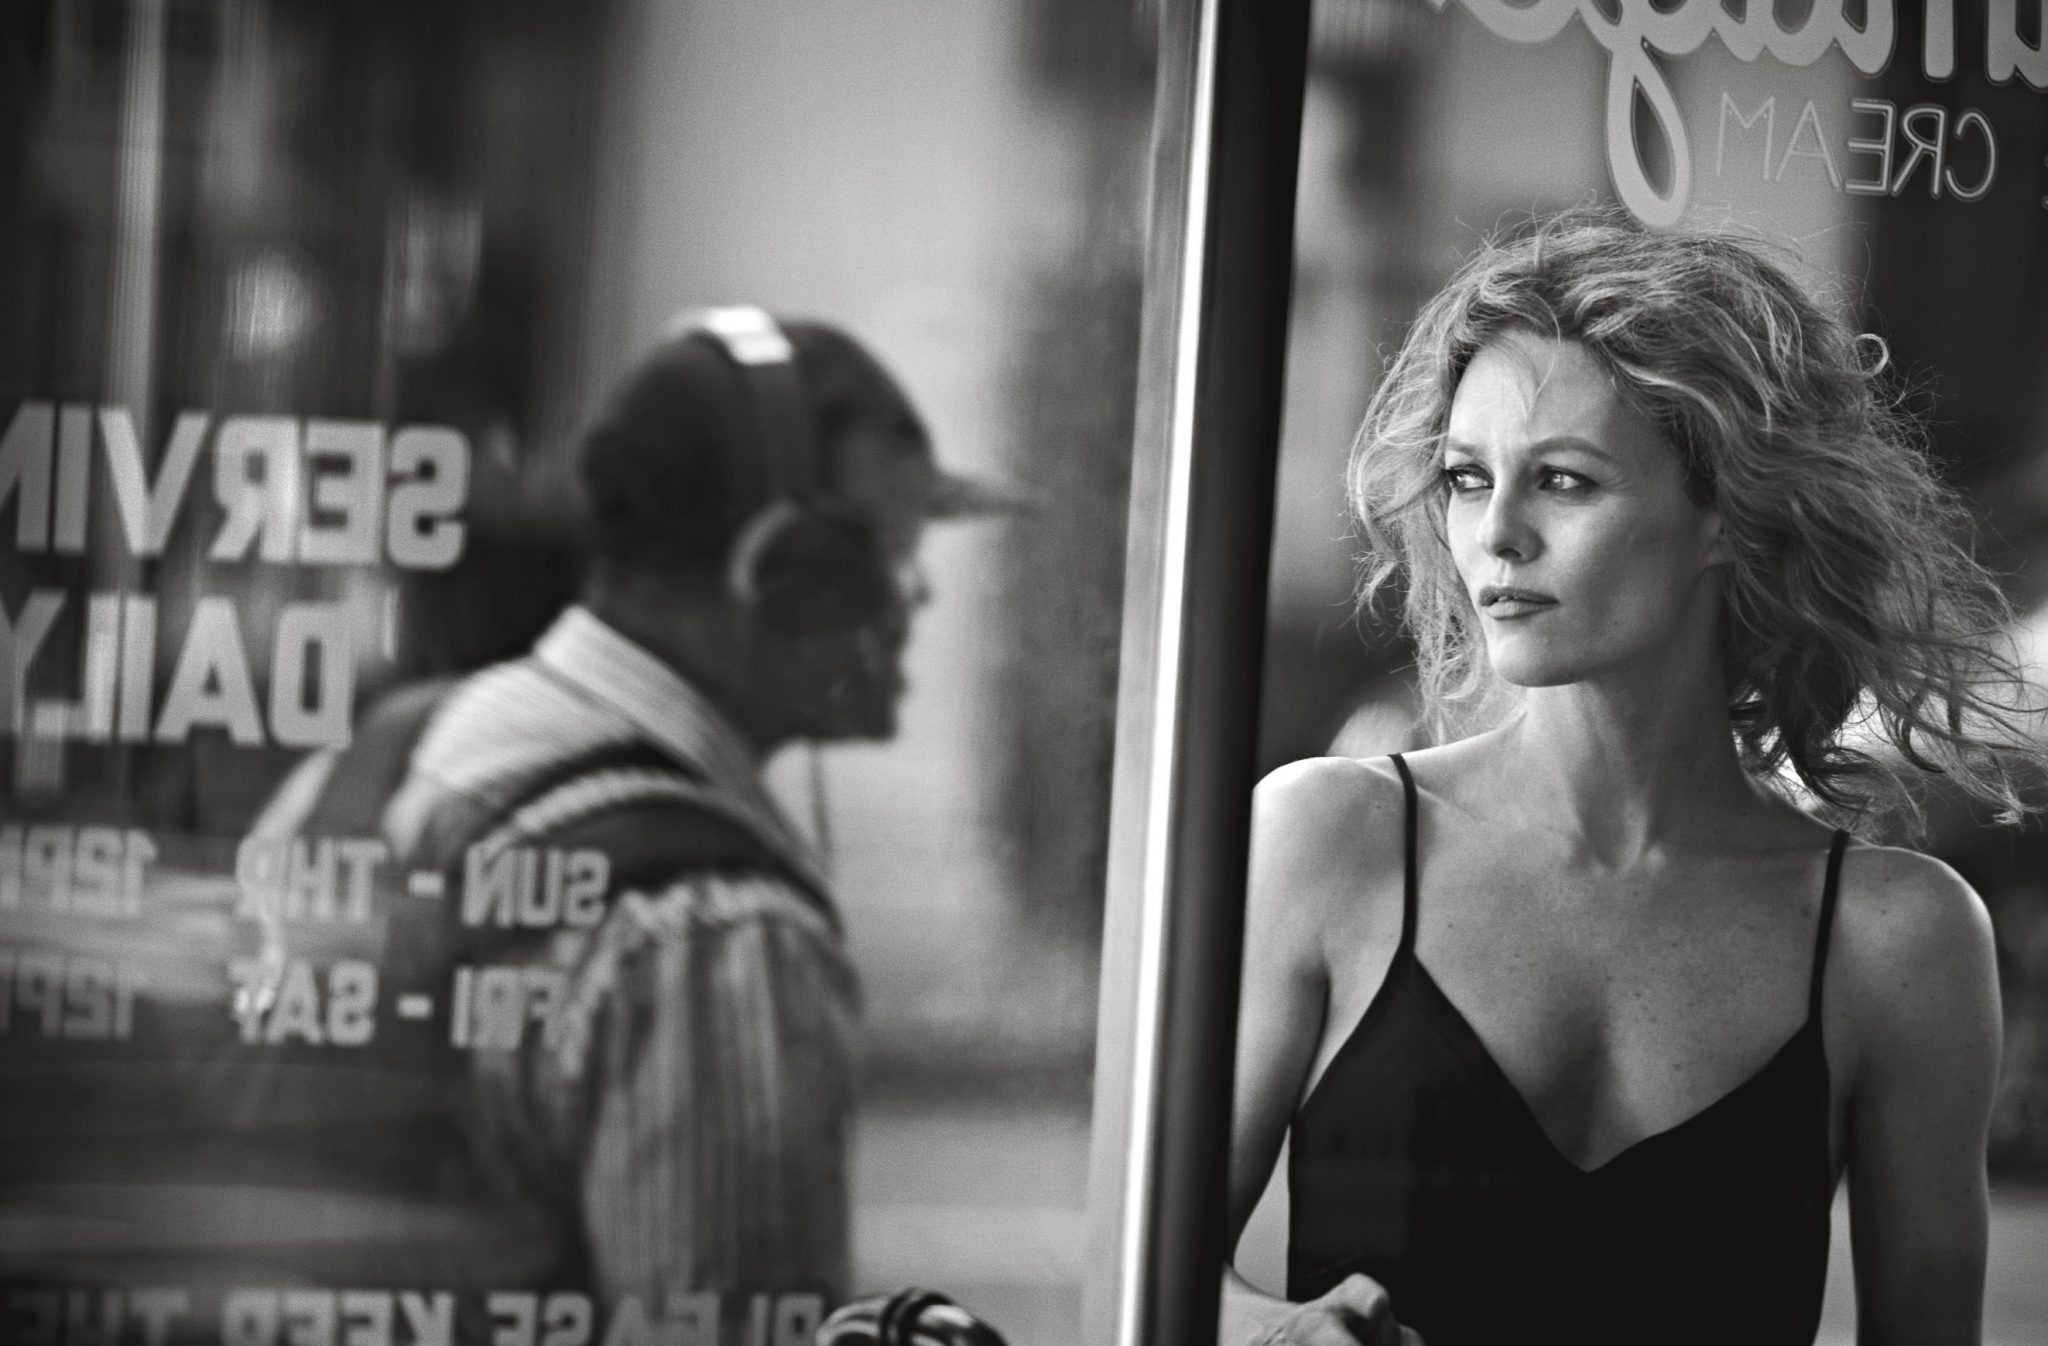 Michael Philouze | Vogue Italia & L'Uomo Vogue | Photographed by Peter Lindbergh | 3